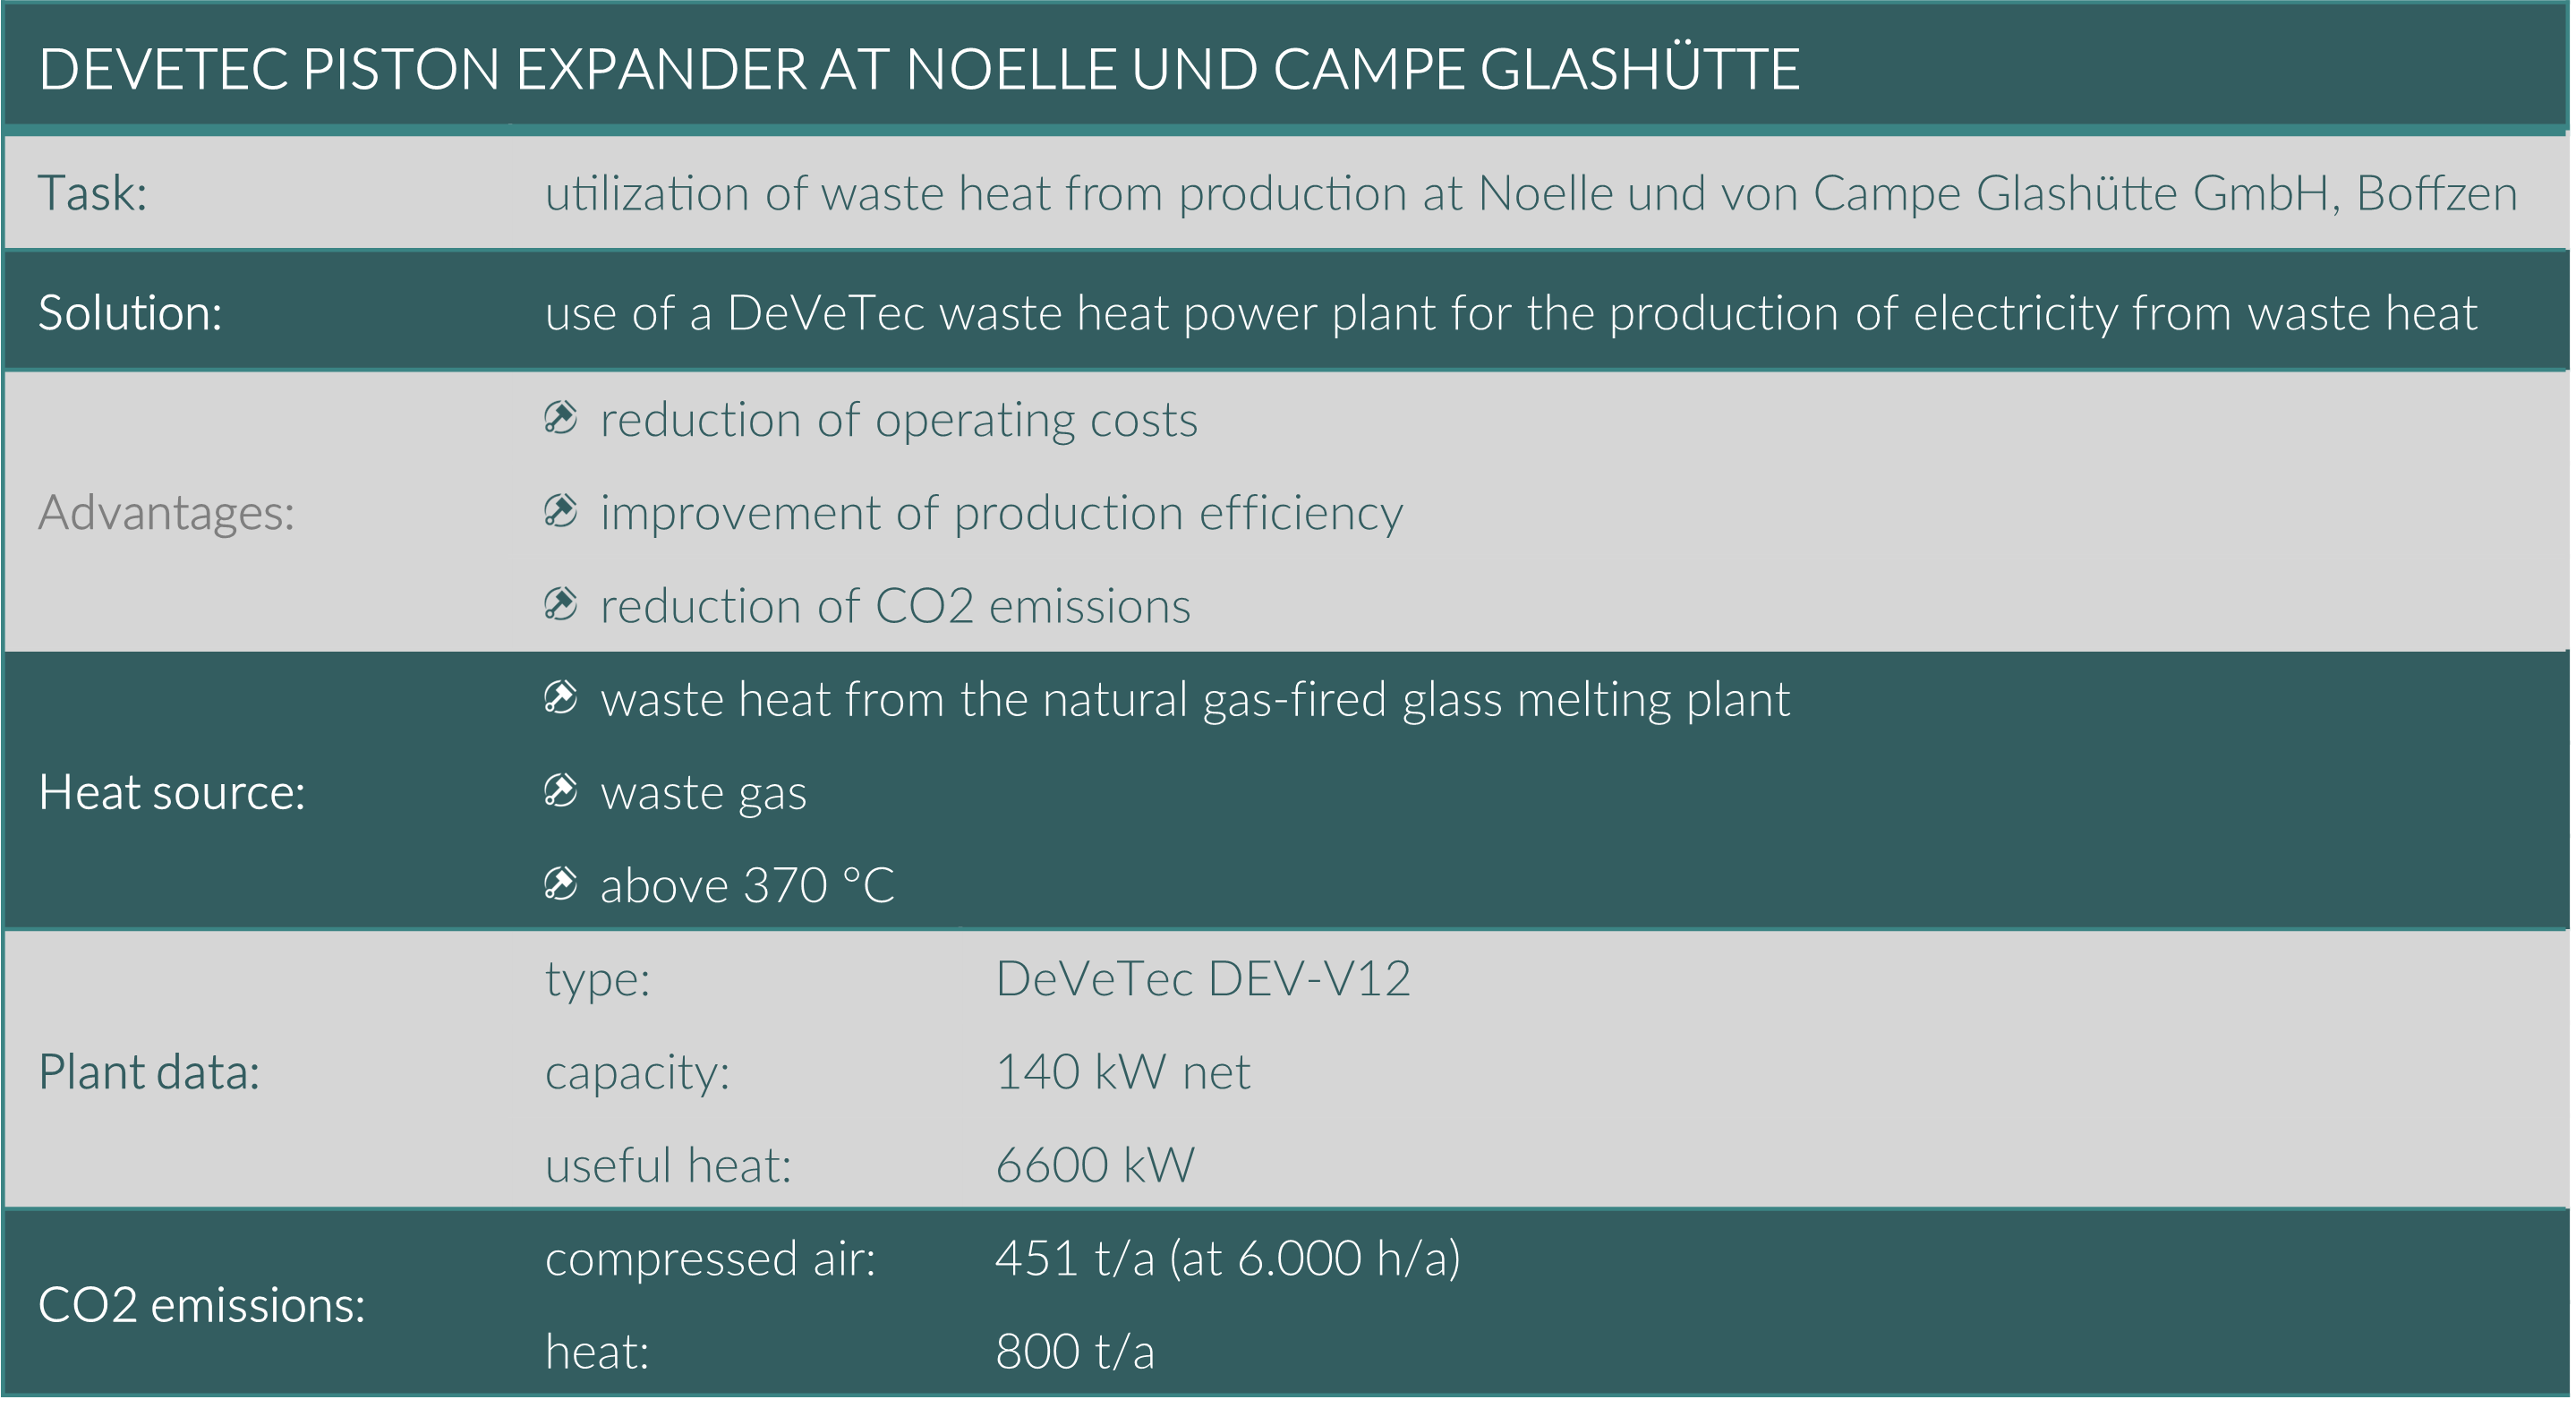 Overview of the DeVeTec waste heat power plant for electricity production at Noelle und von Campe Glashütte